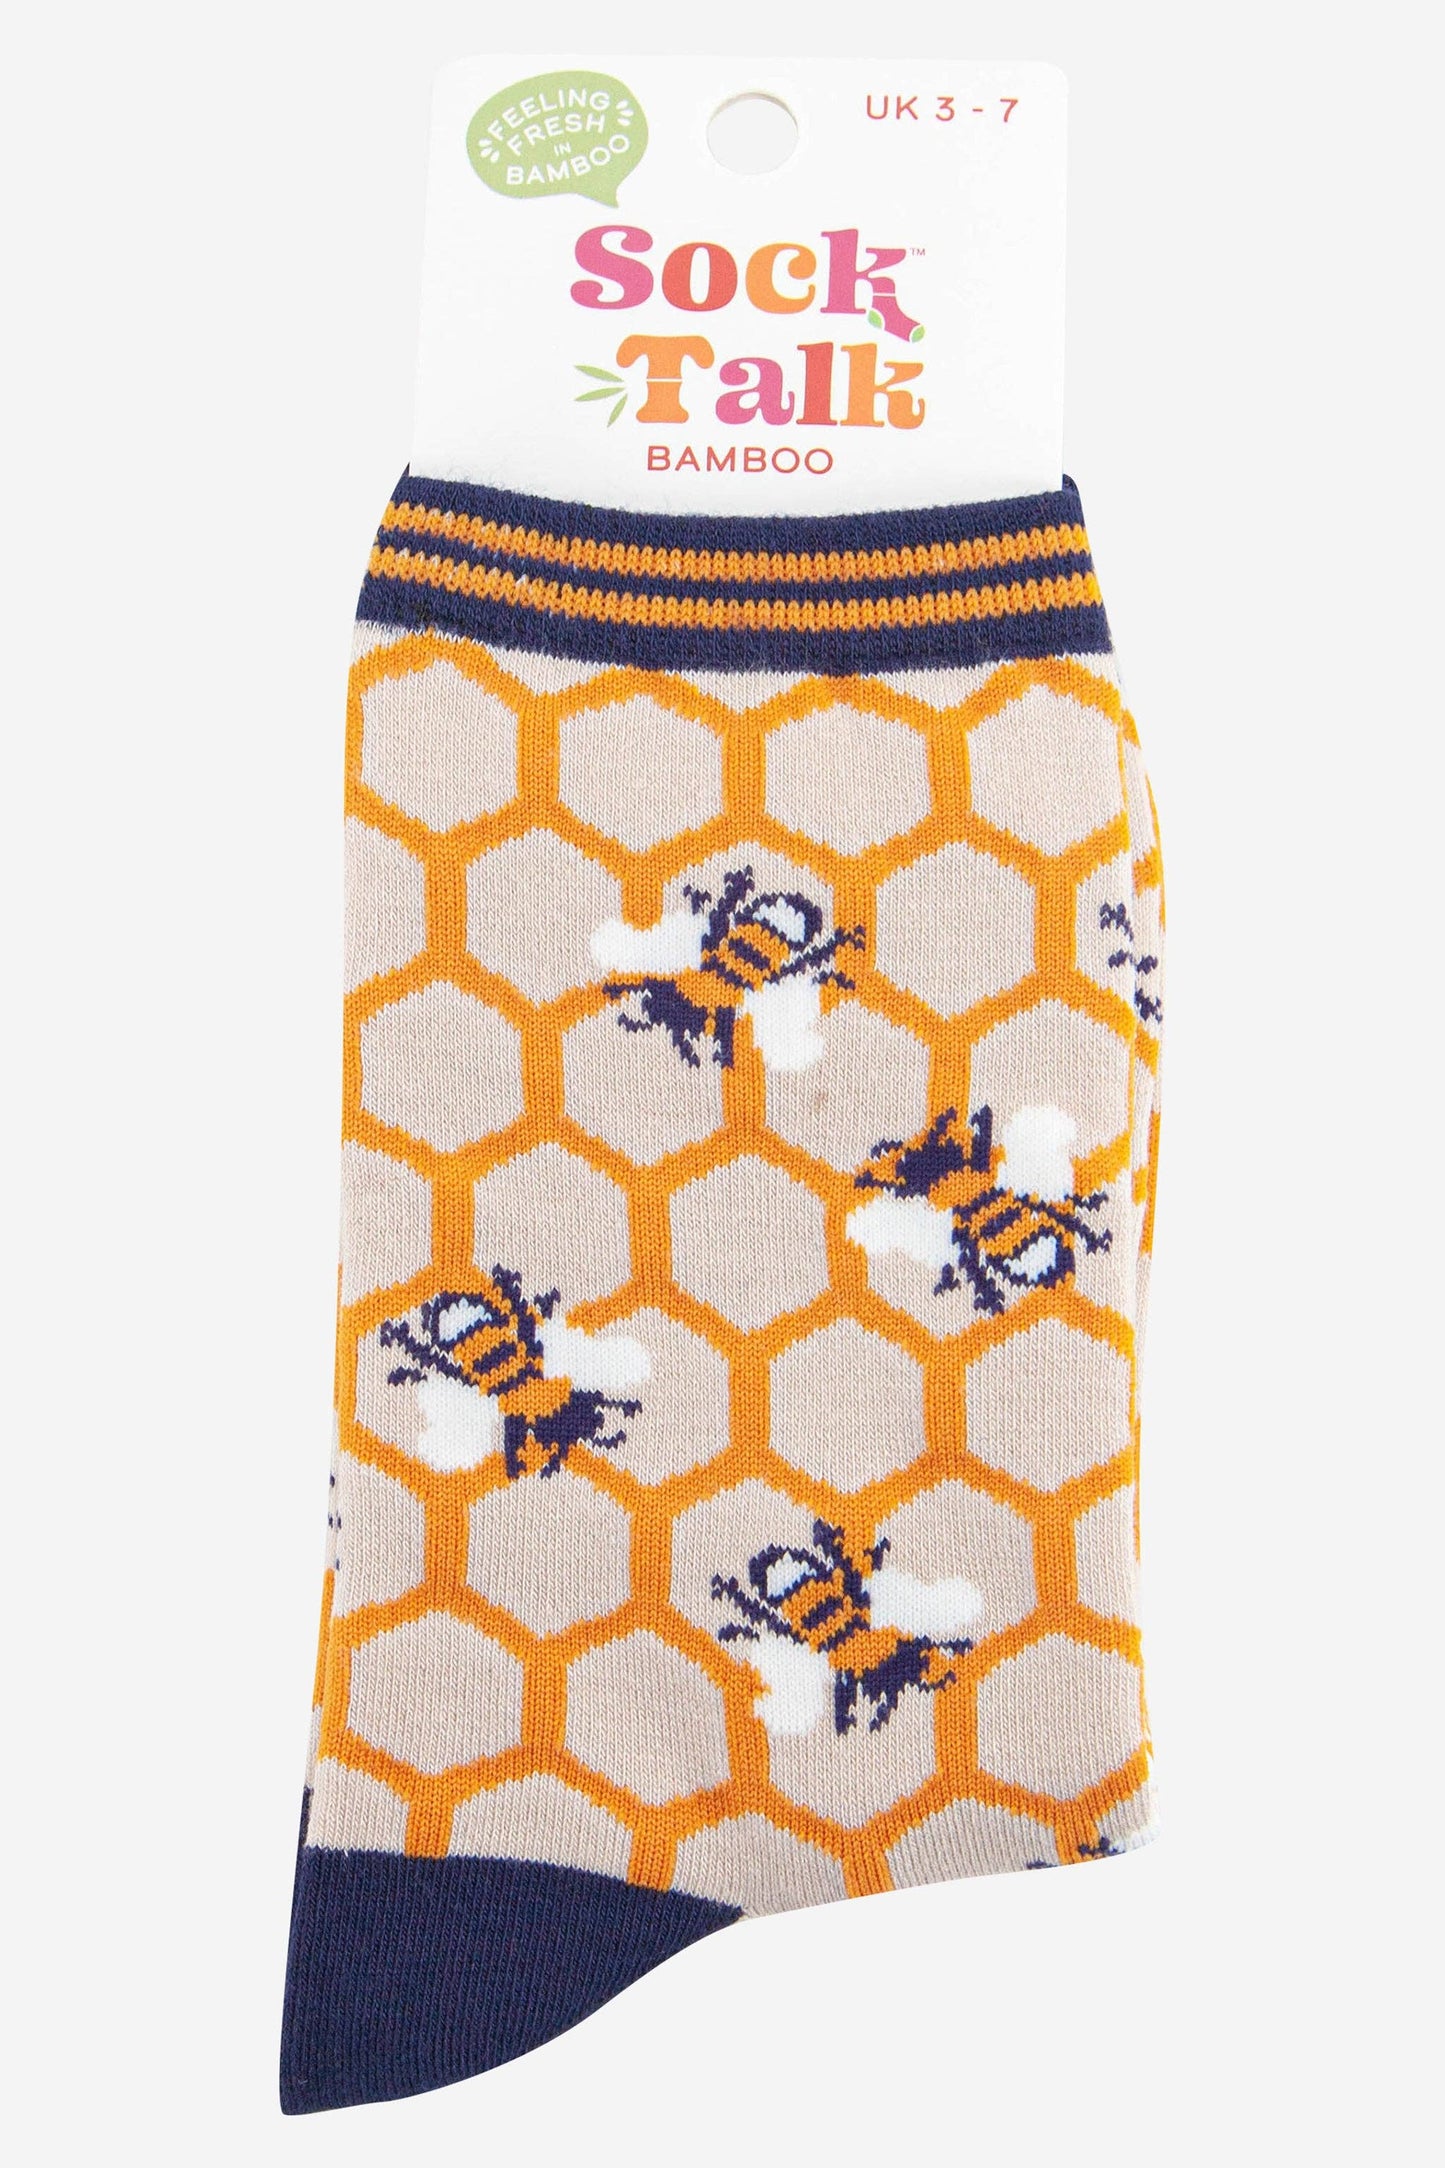 Sock Talk - Women's Honeycomb and Bee Bamboo Socks